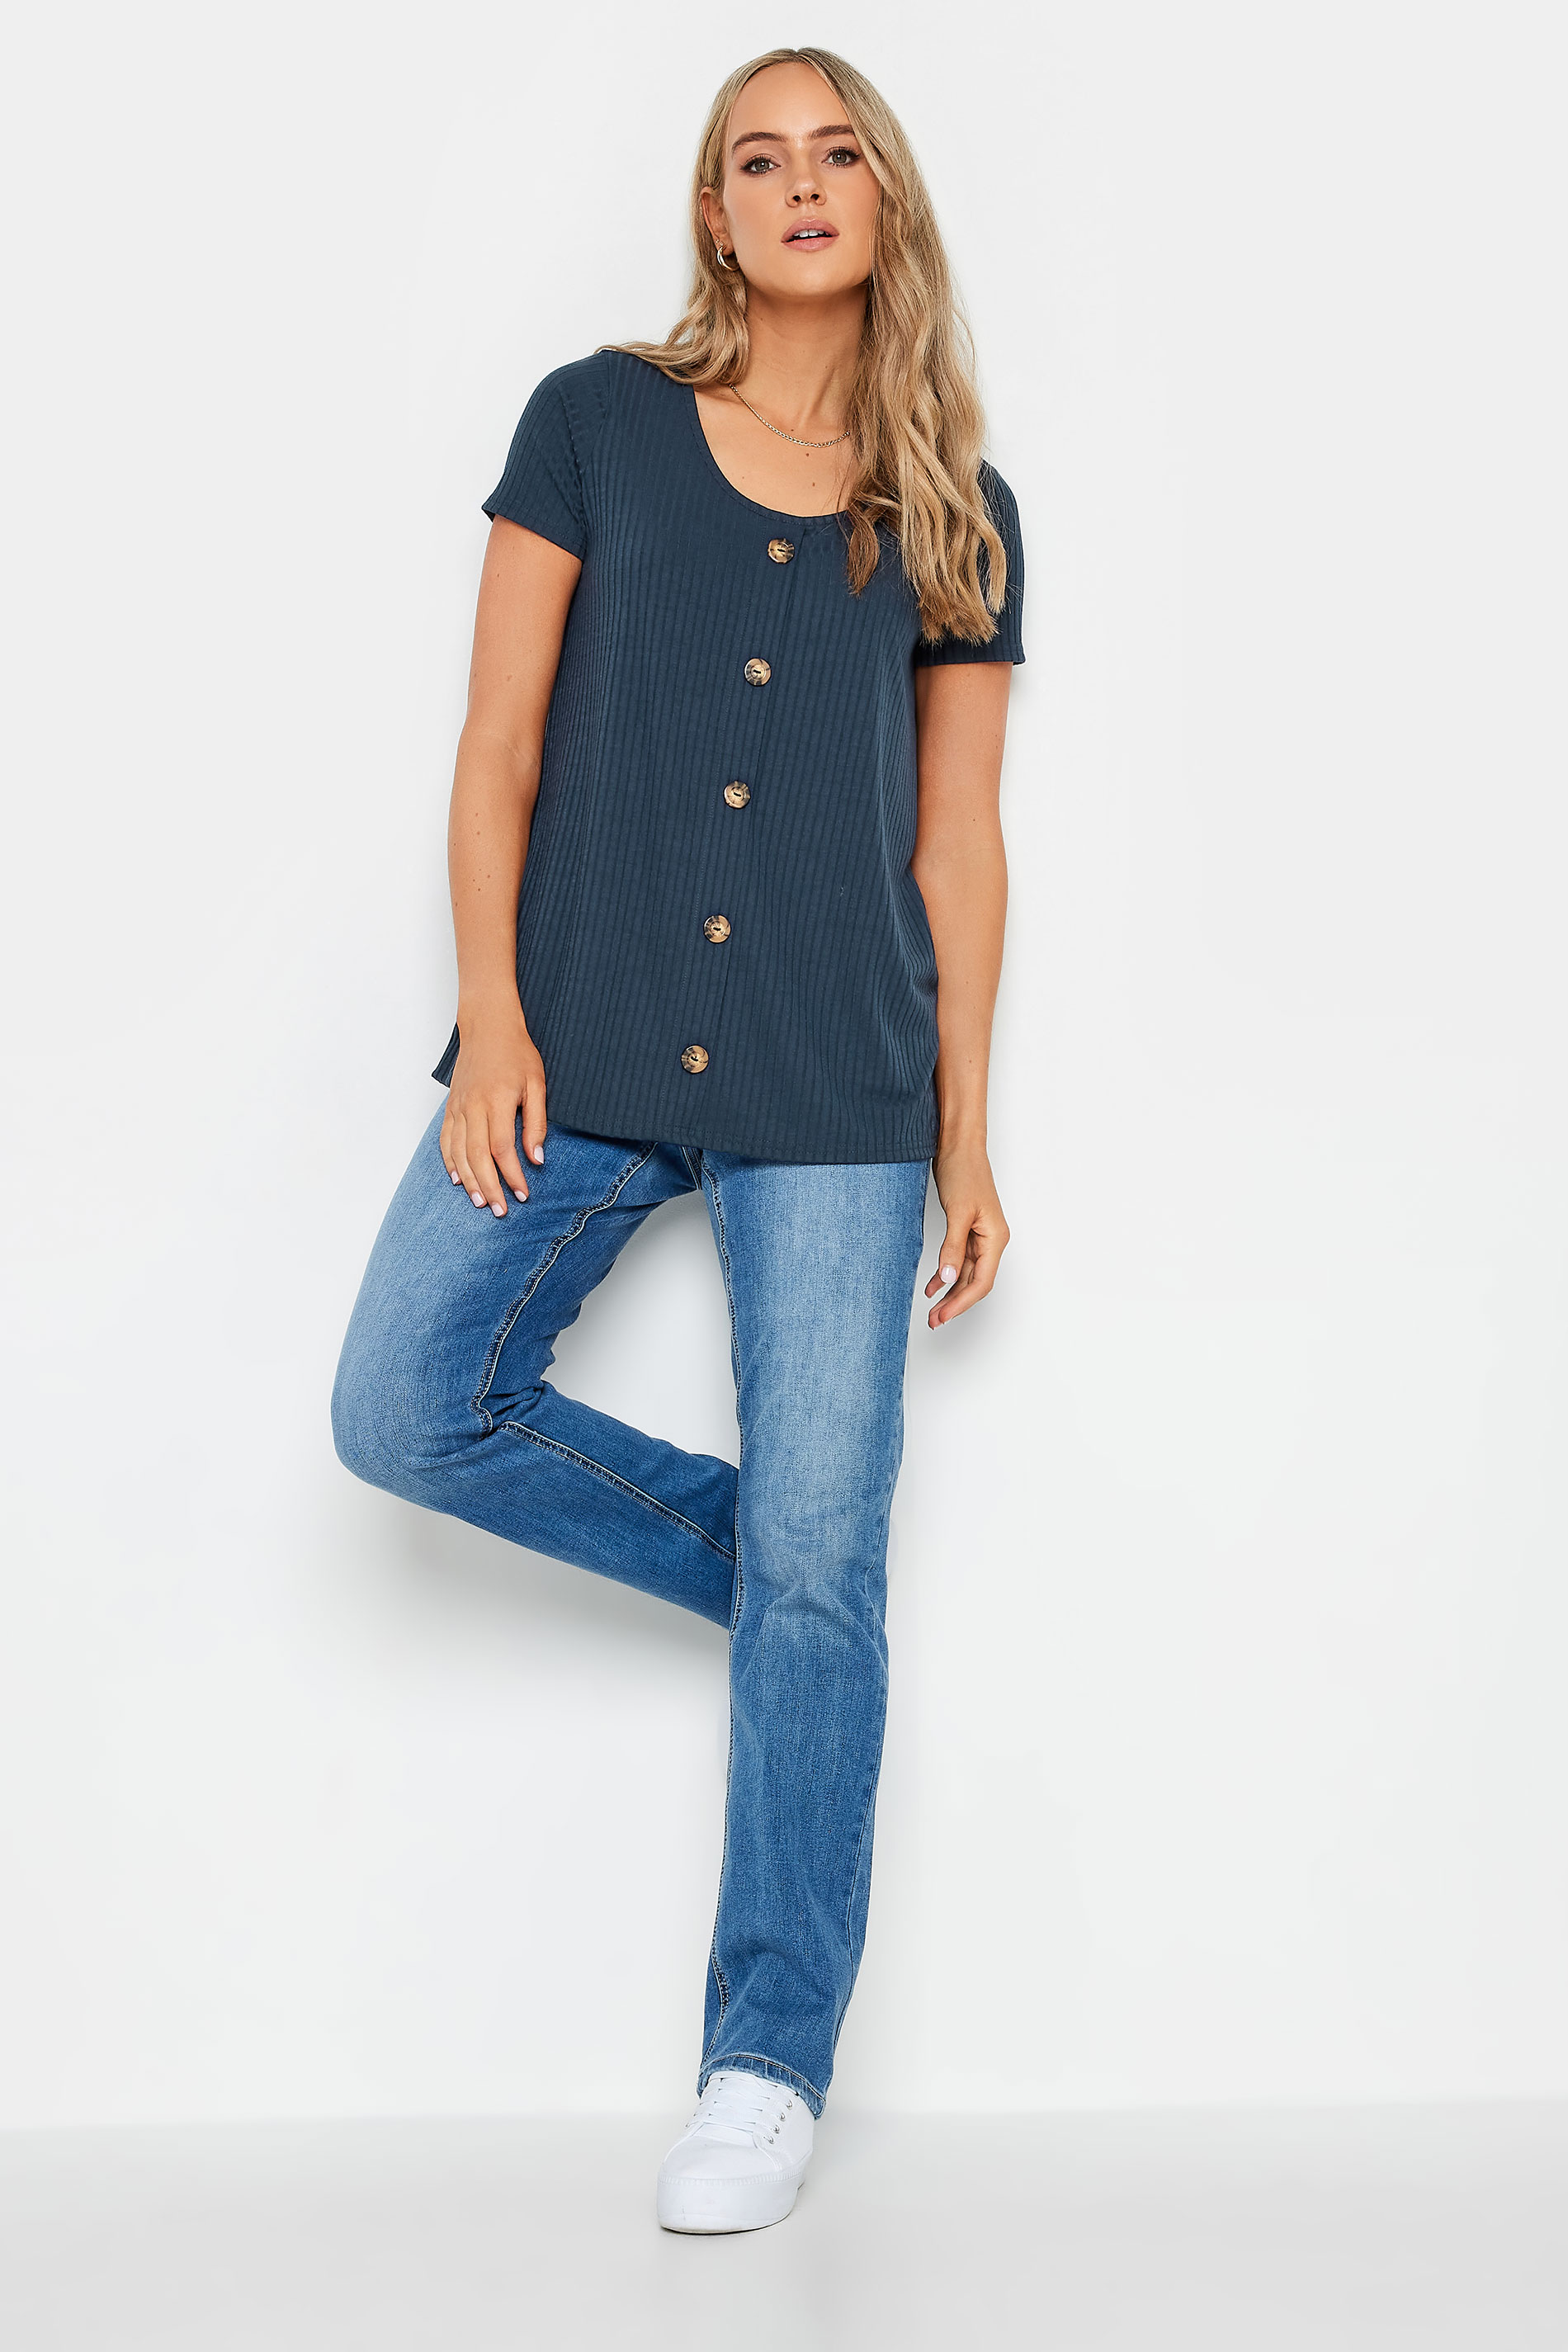 LTS Tall Women's Navy Blue Ribbed Button Detail T-Shirt | Long Tall Sally  2